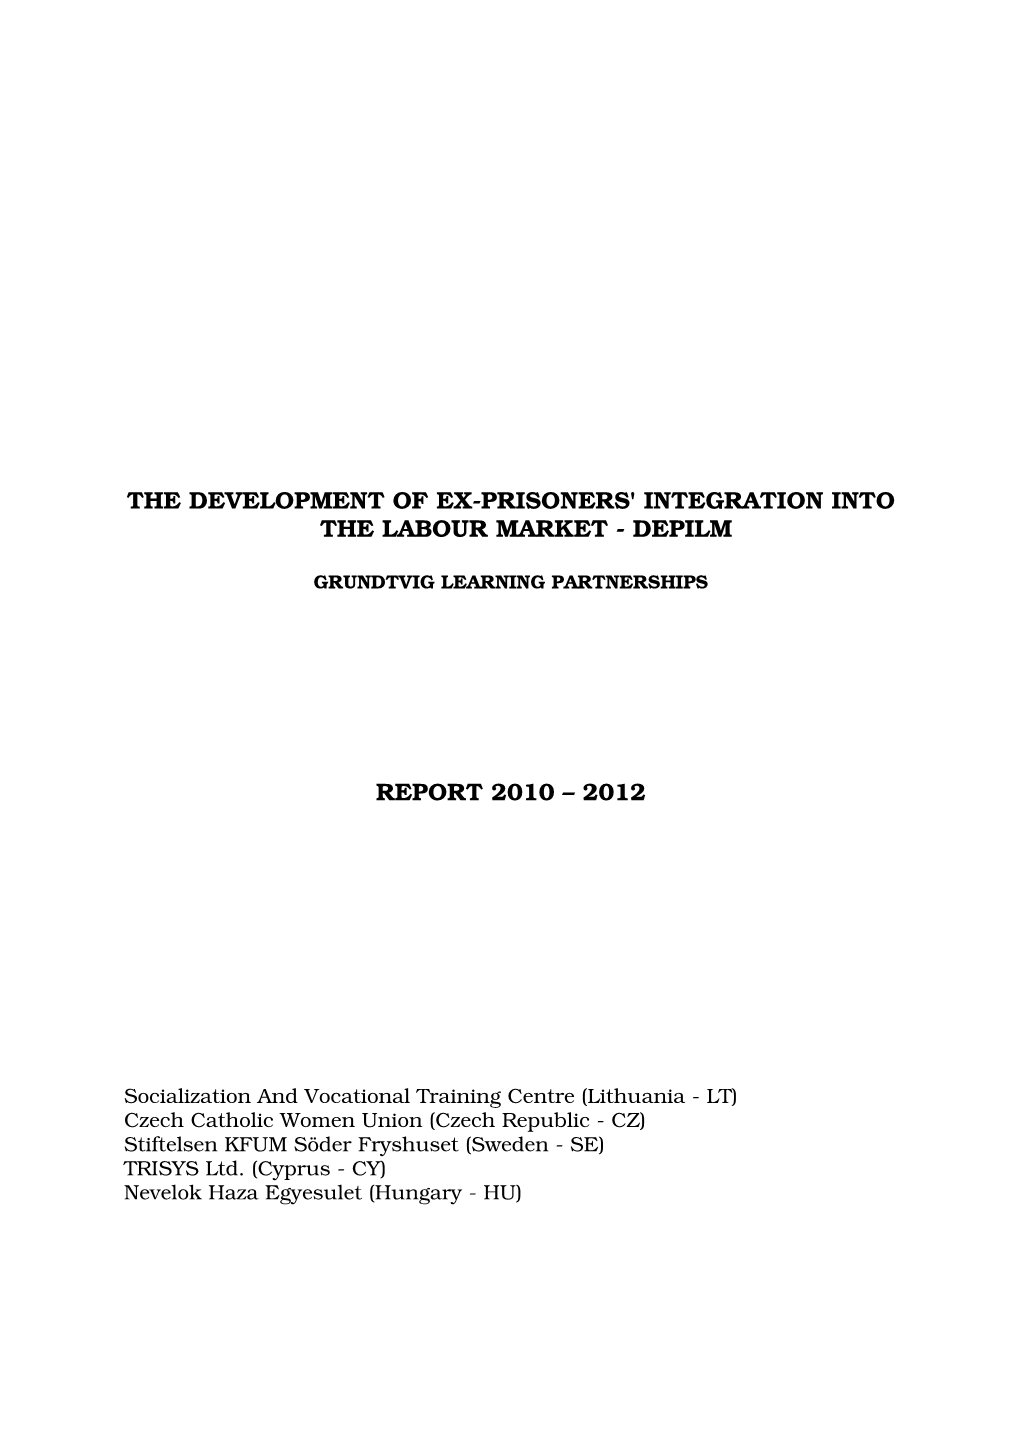 The Development of Ex-Prisoners' Integration Into the Labour Market - Depilm